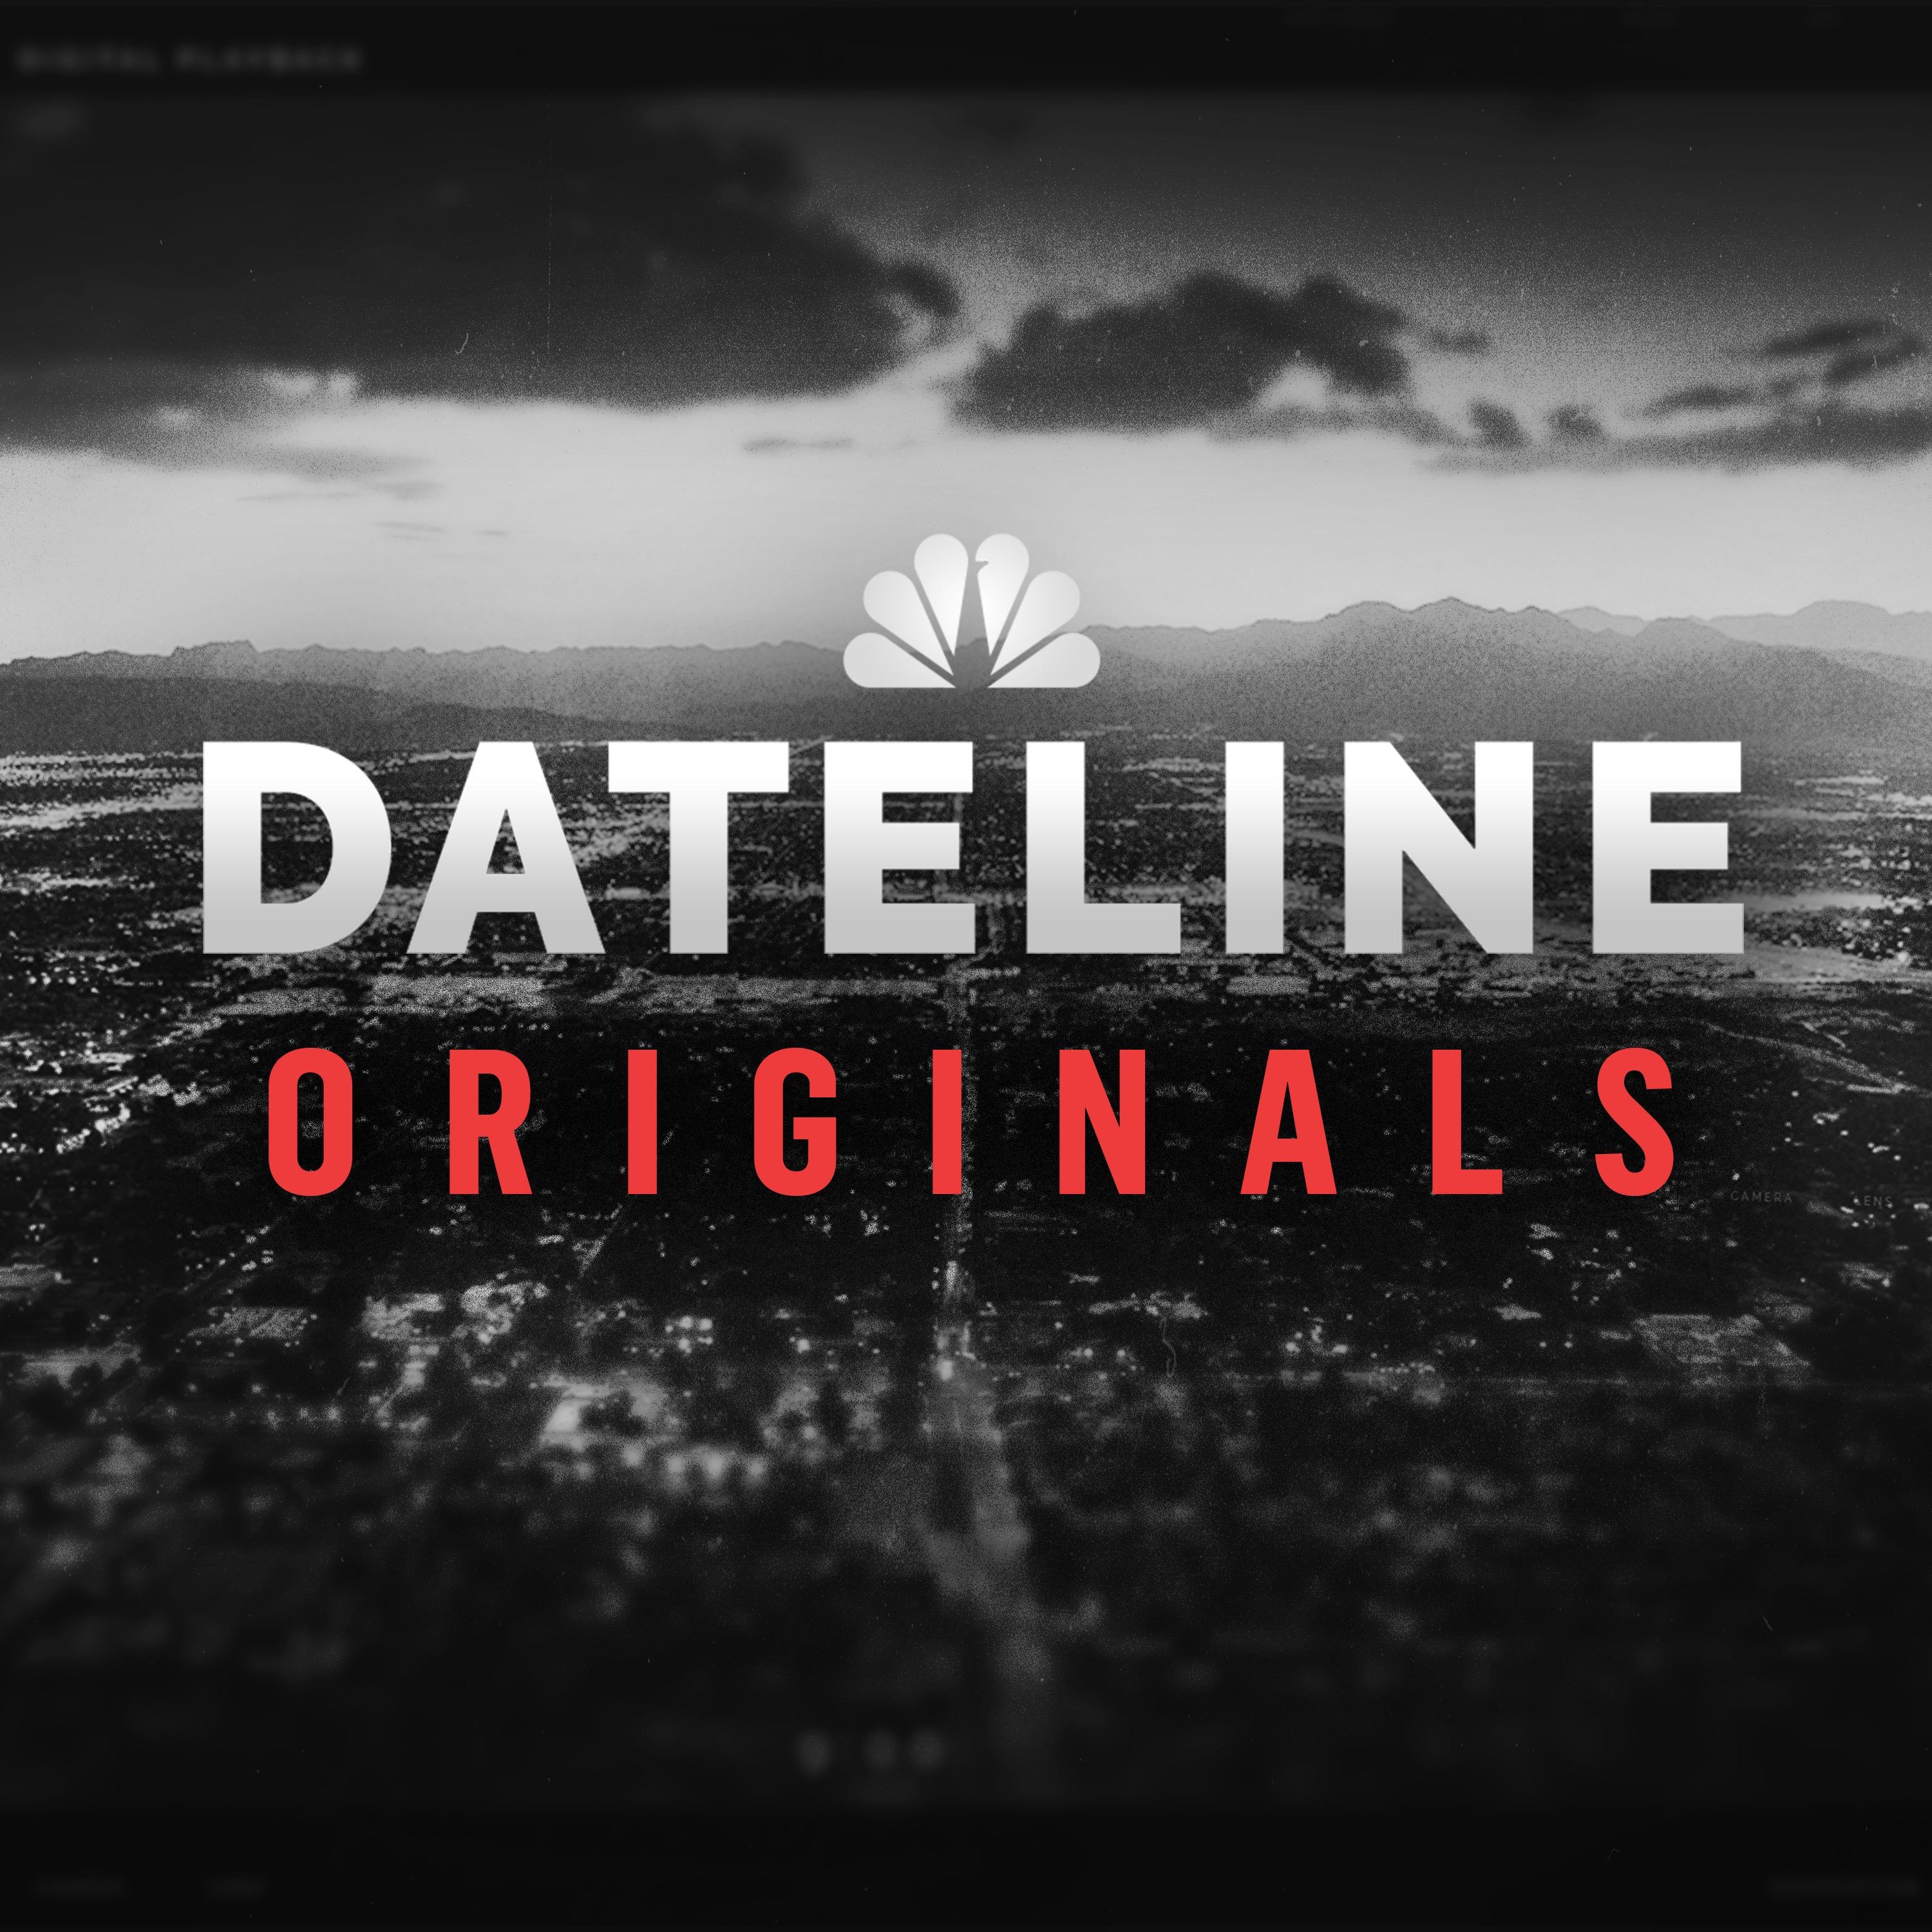 Show poster of Dateline Originals